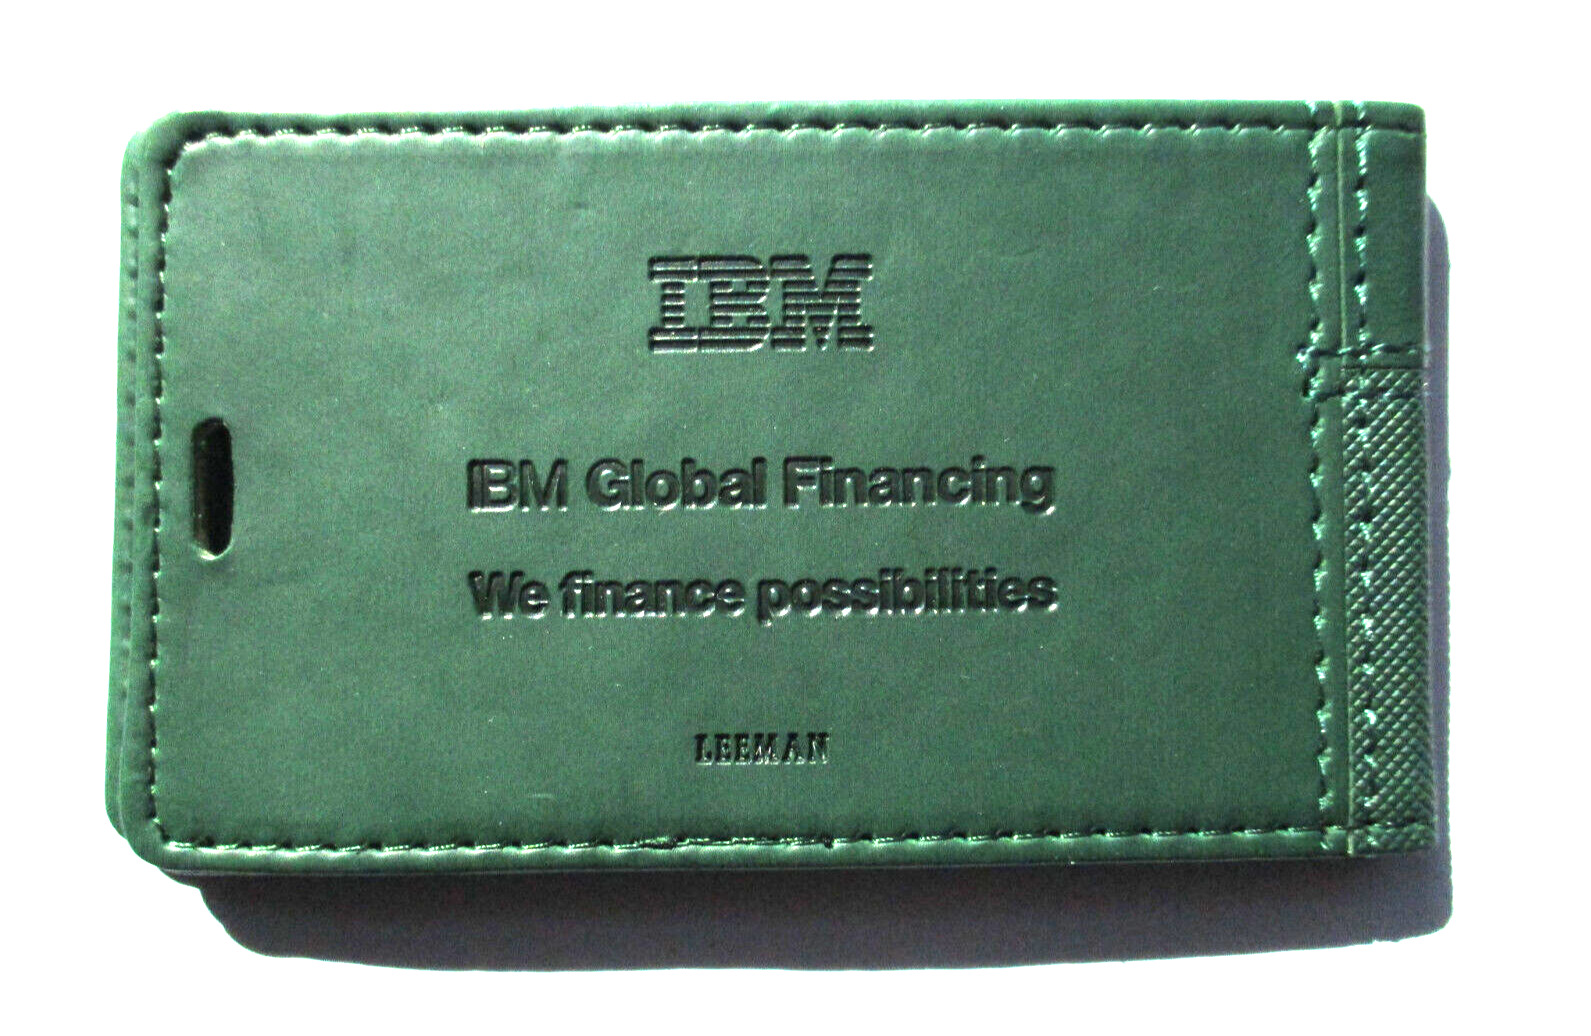 IBM Global Financing Leather Logo Luggage Identification Tag by Leeman NEW